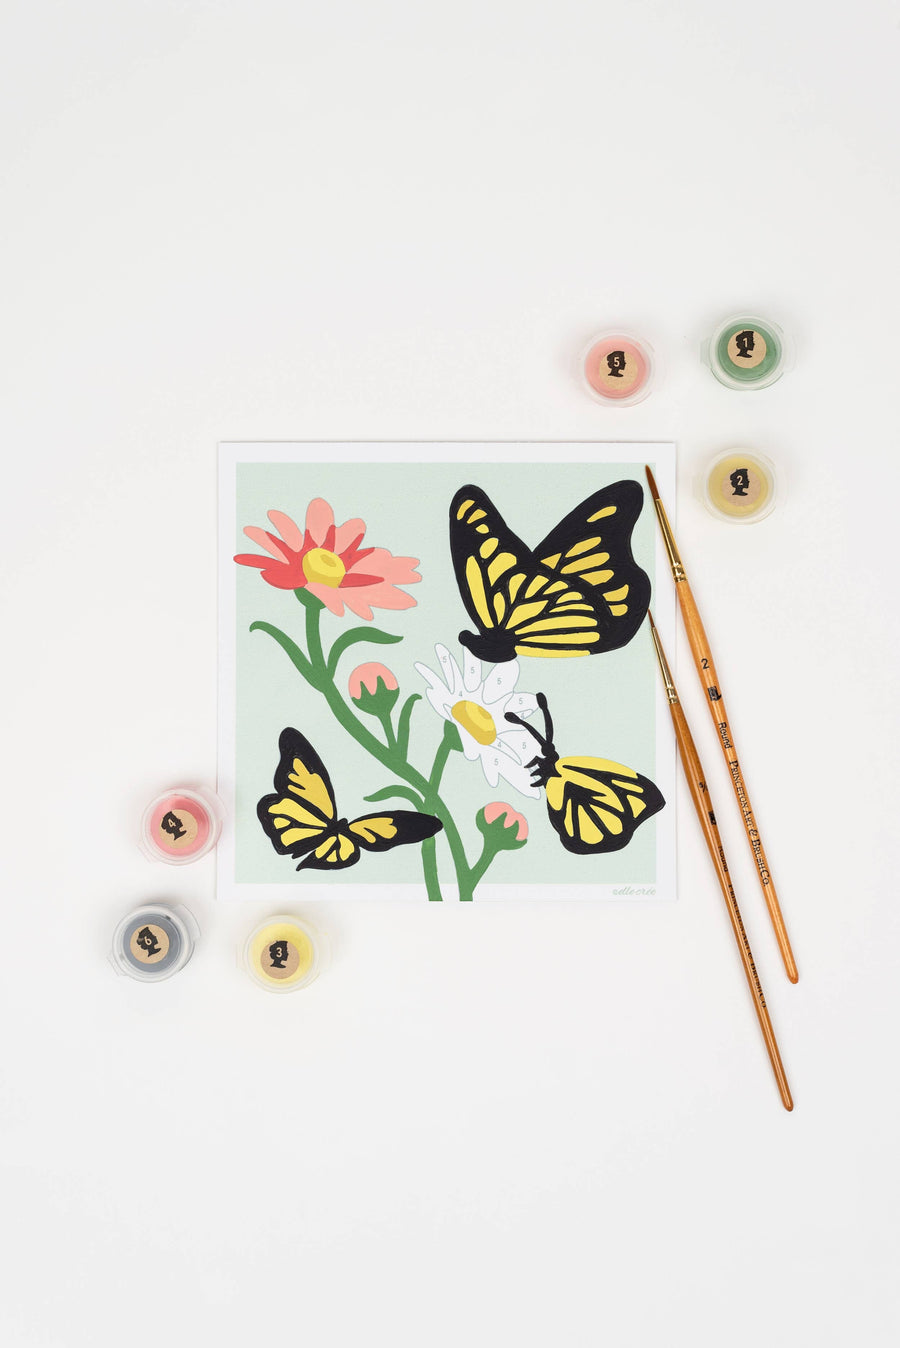 Butterflies MINI Paint-by-Number Kit Mini Chill Elle Crée (She Creates) 